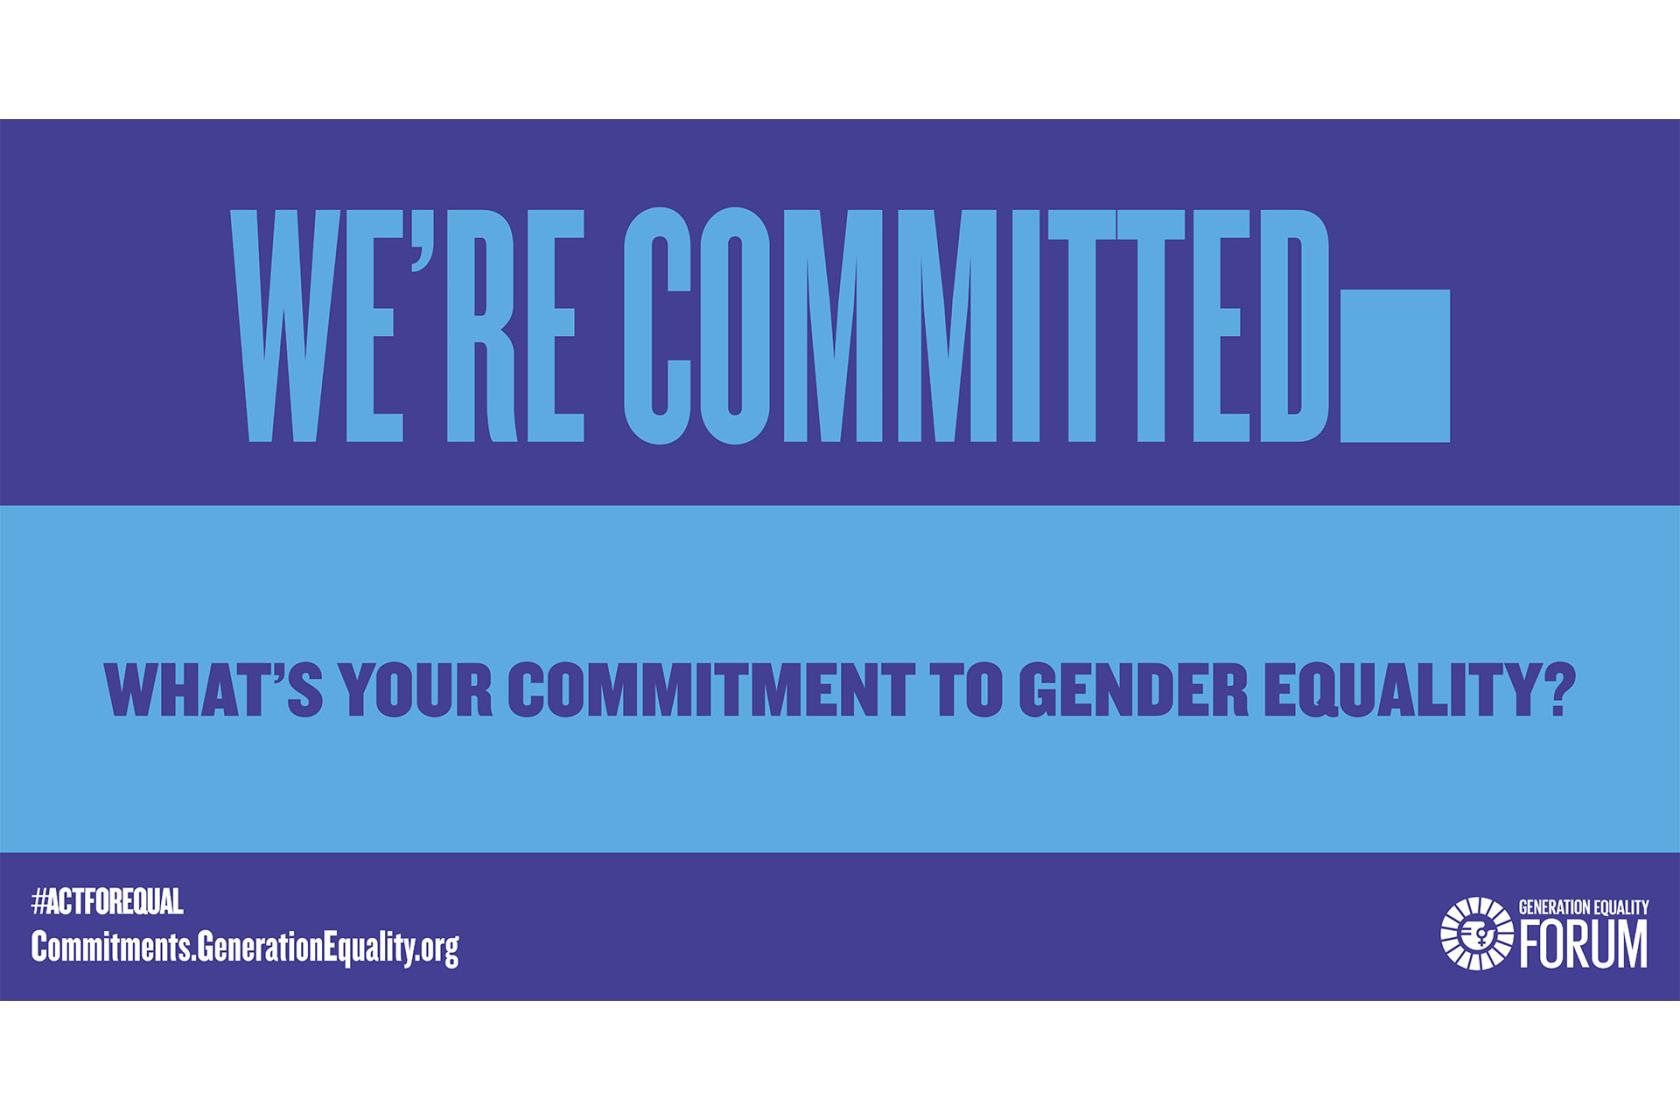 Text på lila och blå bakgrund. We are comitted. Generation equality forum. 